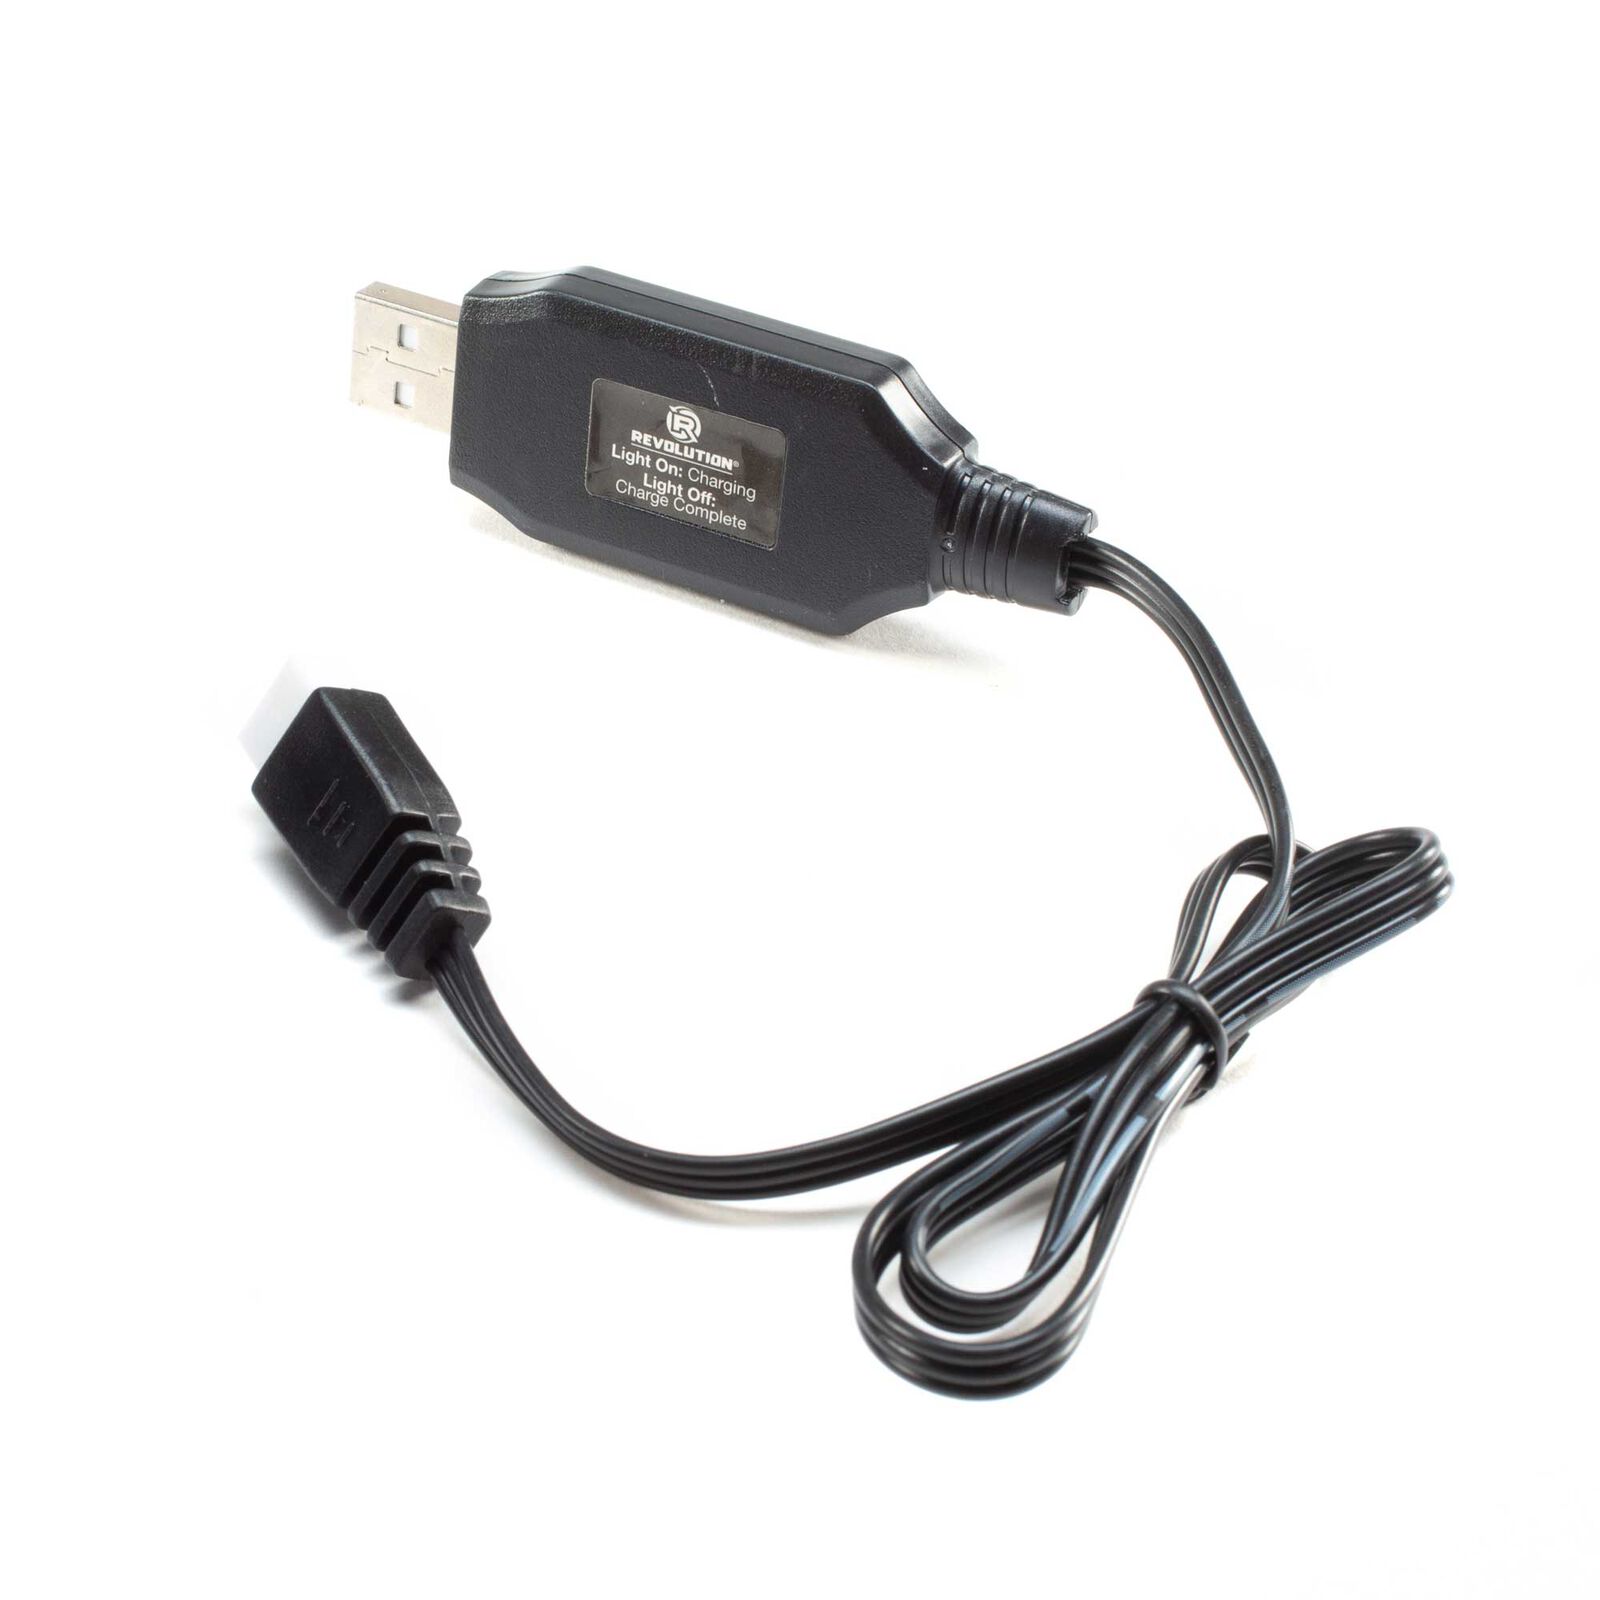 USB Charger: Vizo XL